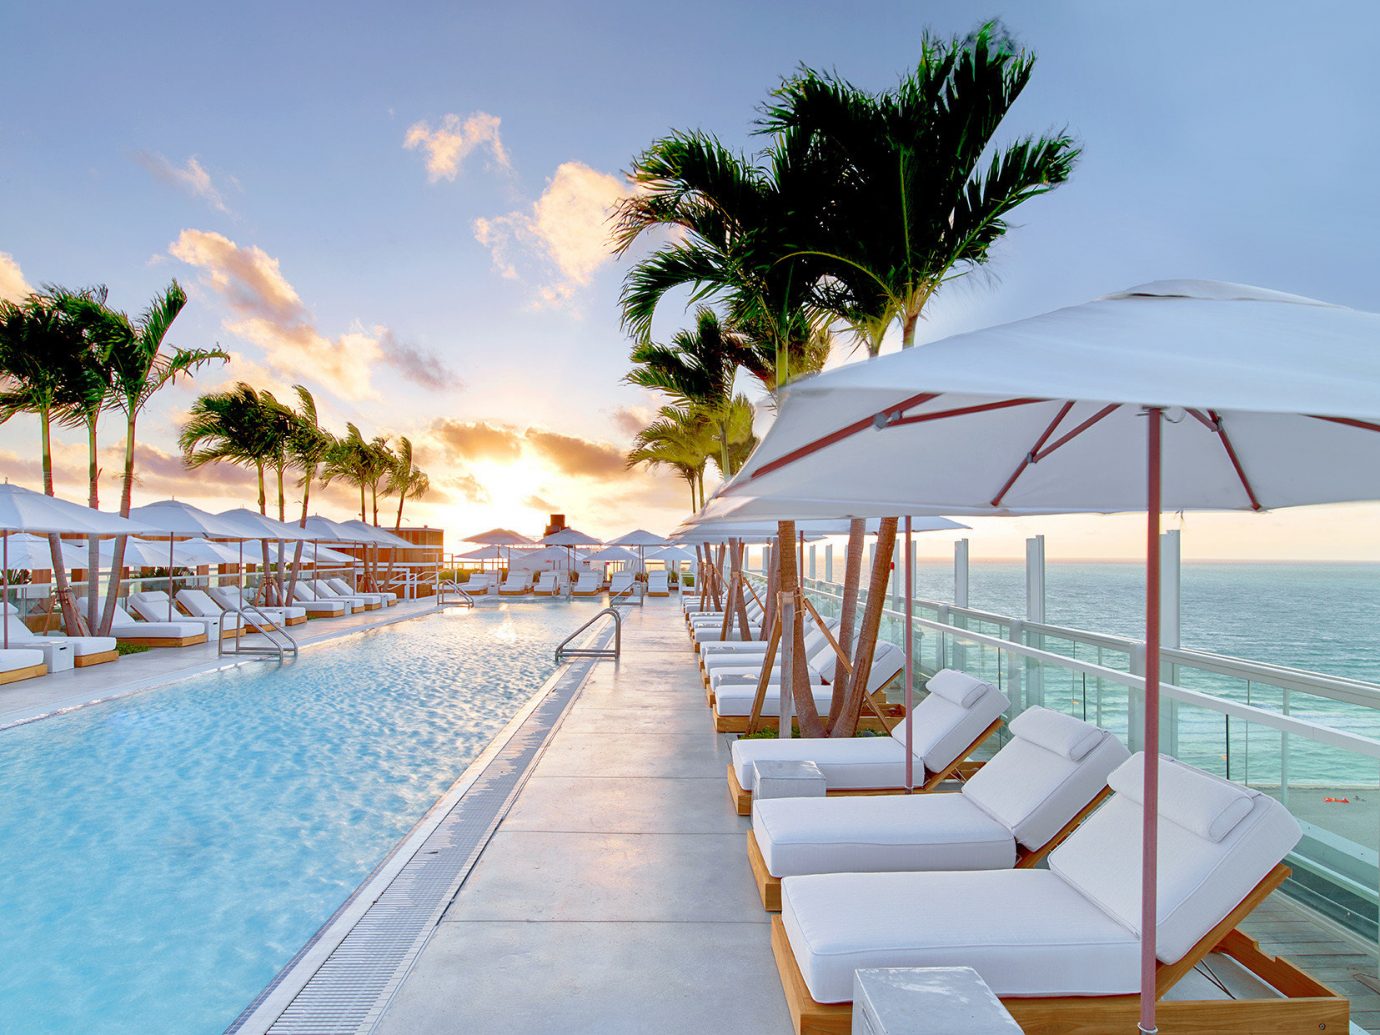 Pool at 1 Hotel South Beach - Miami Hotel